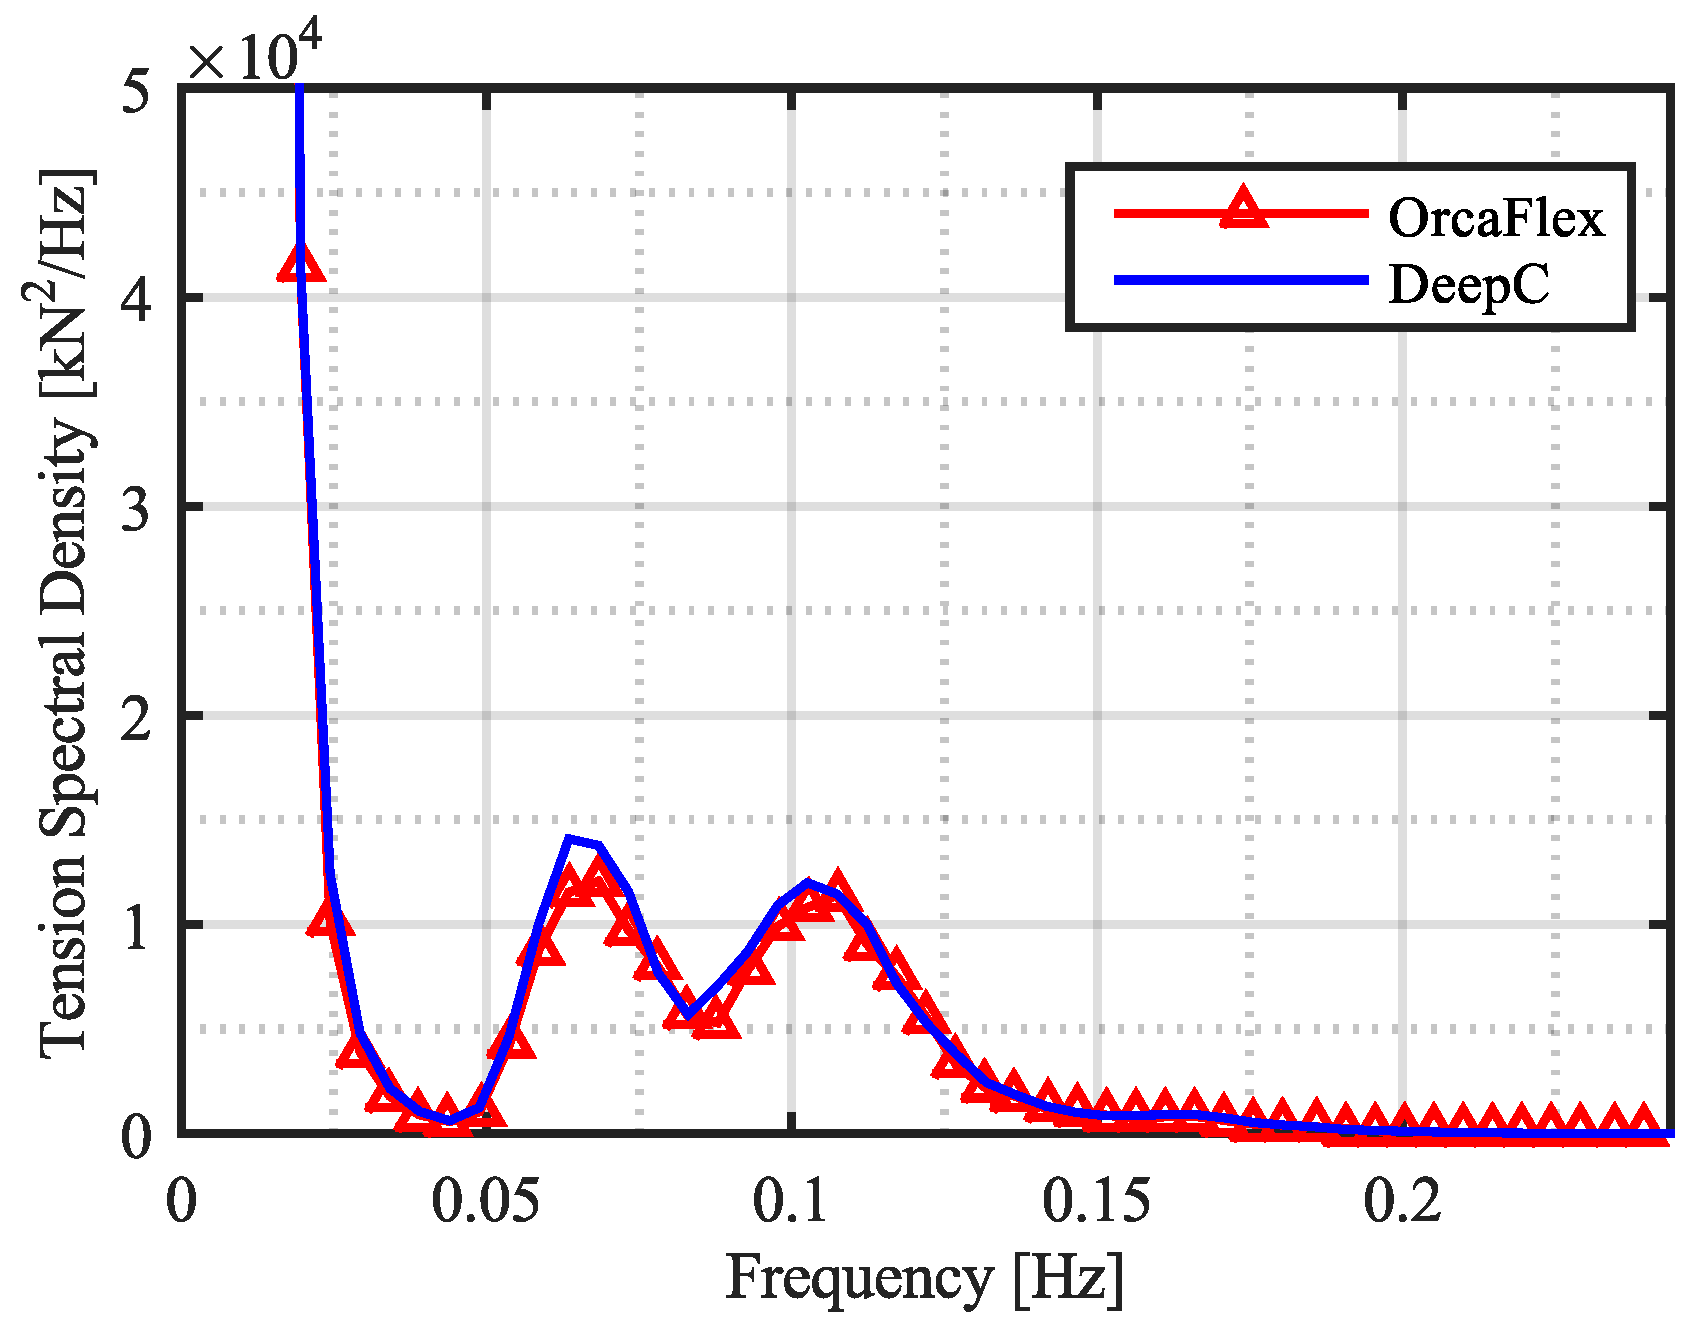 orcaflex def dynamicsprogress